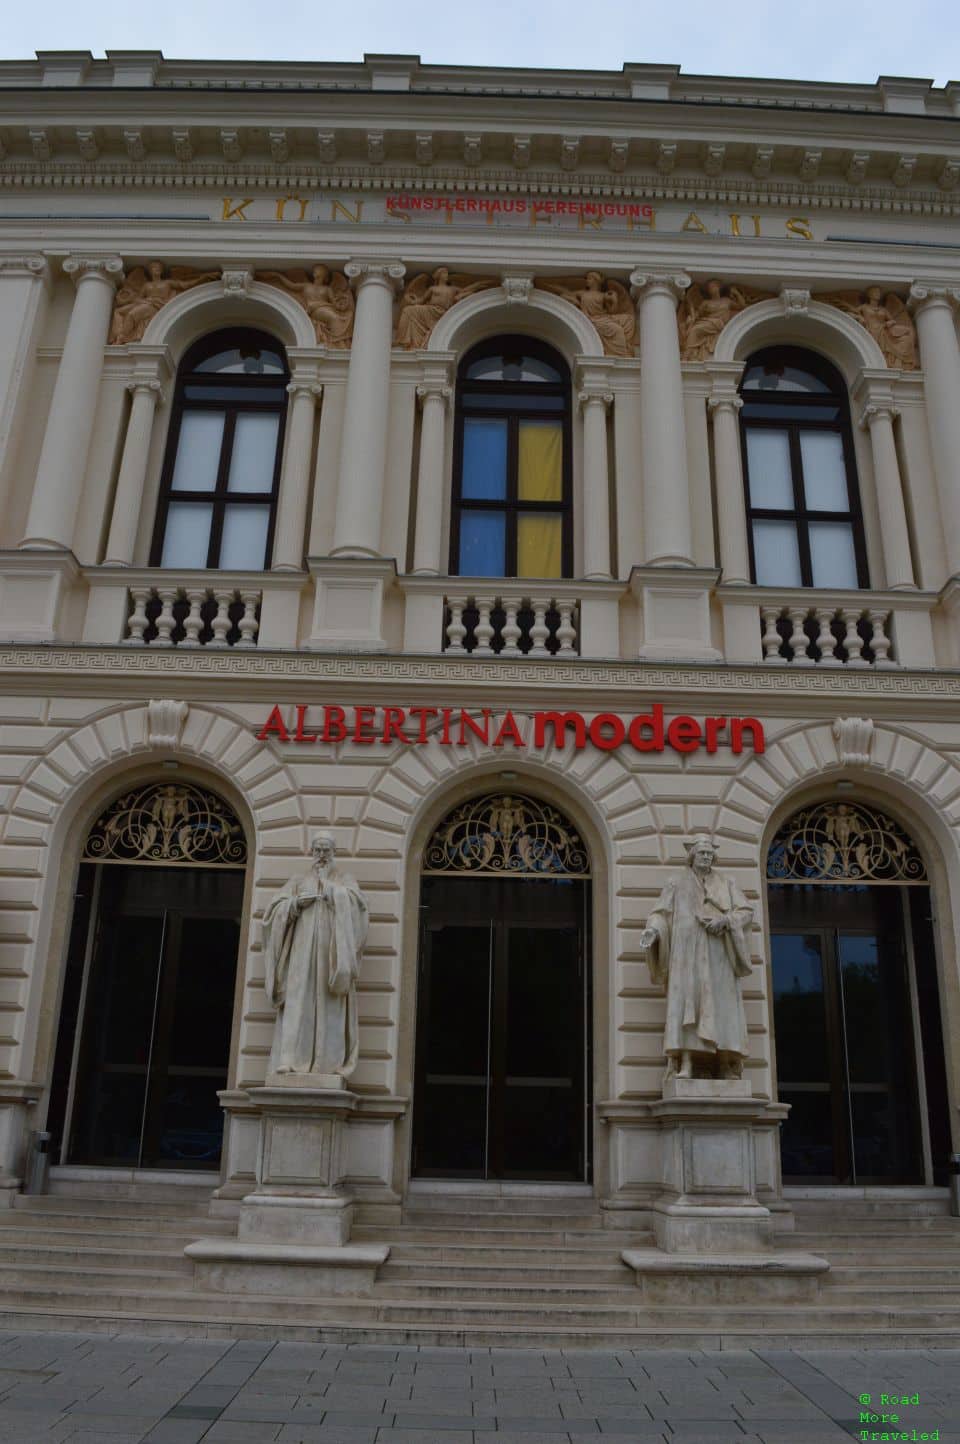 Albertina Modern, Vienna